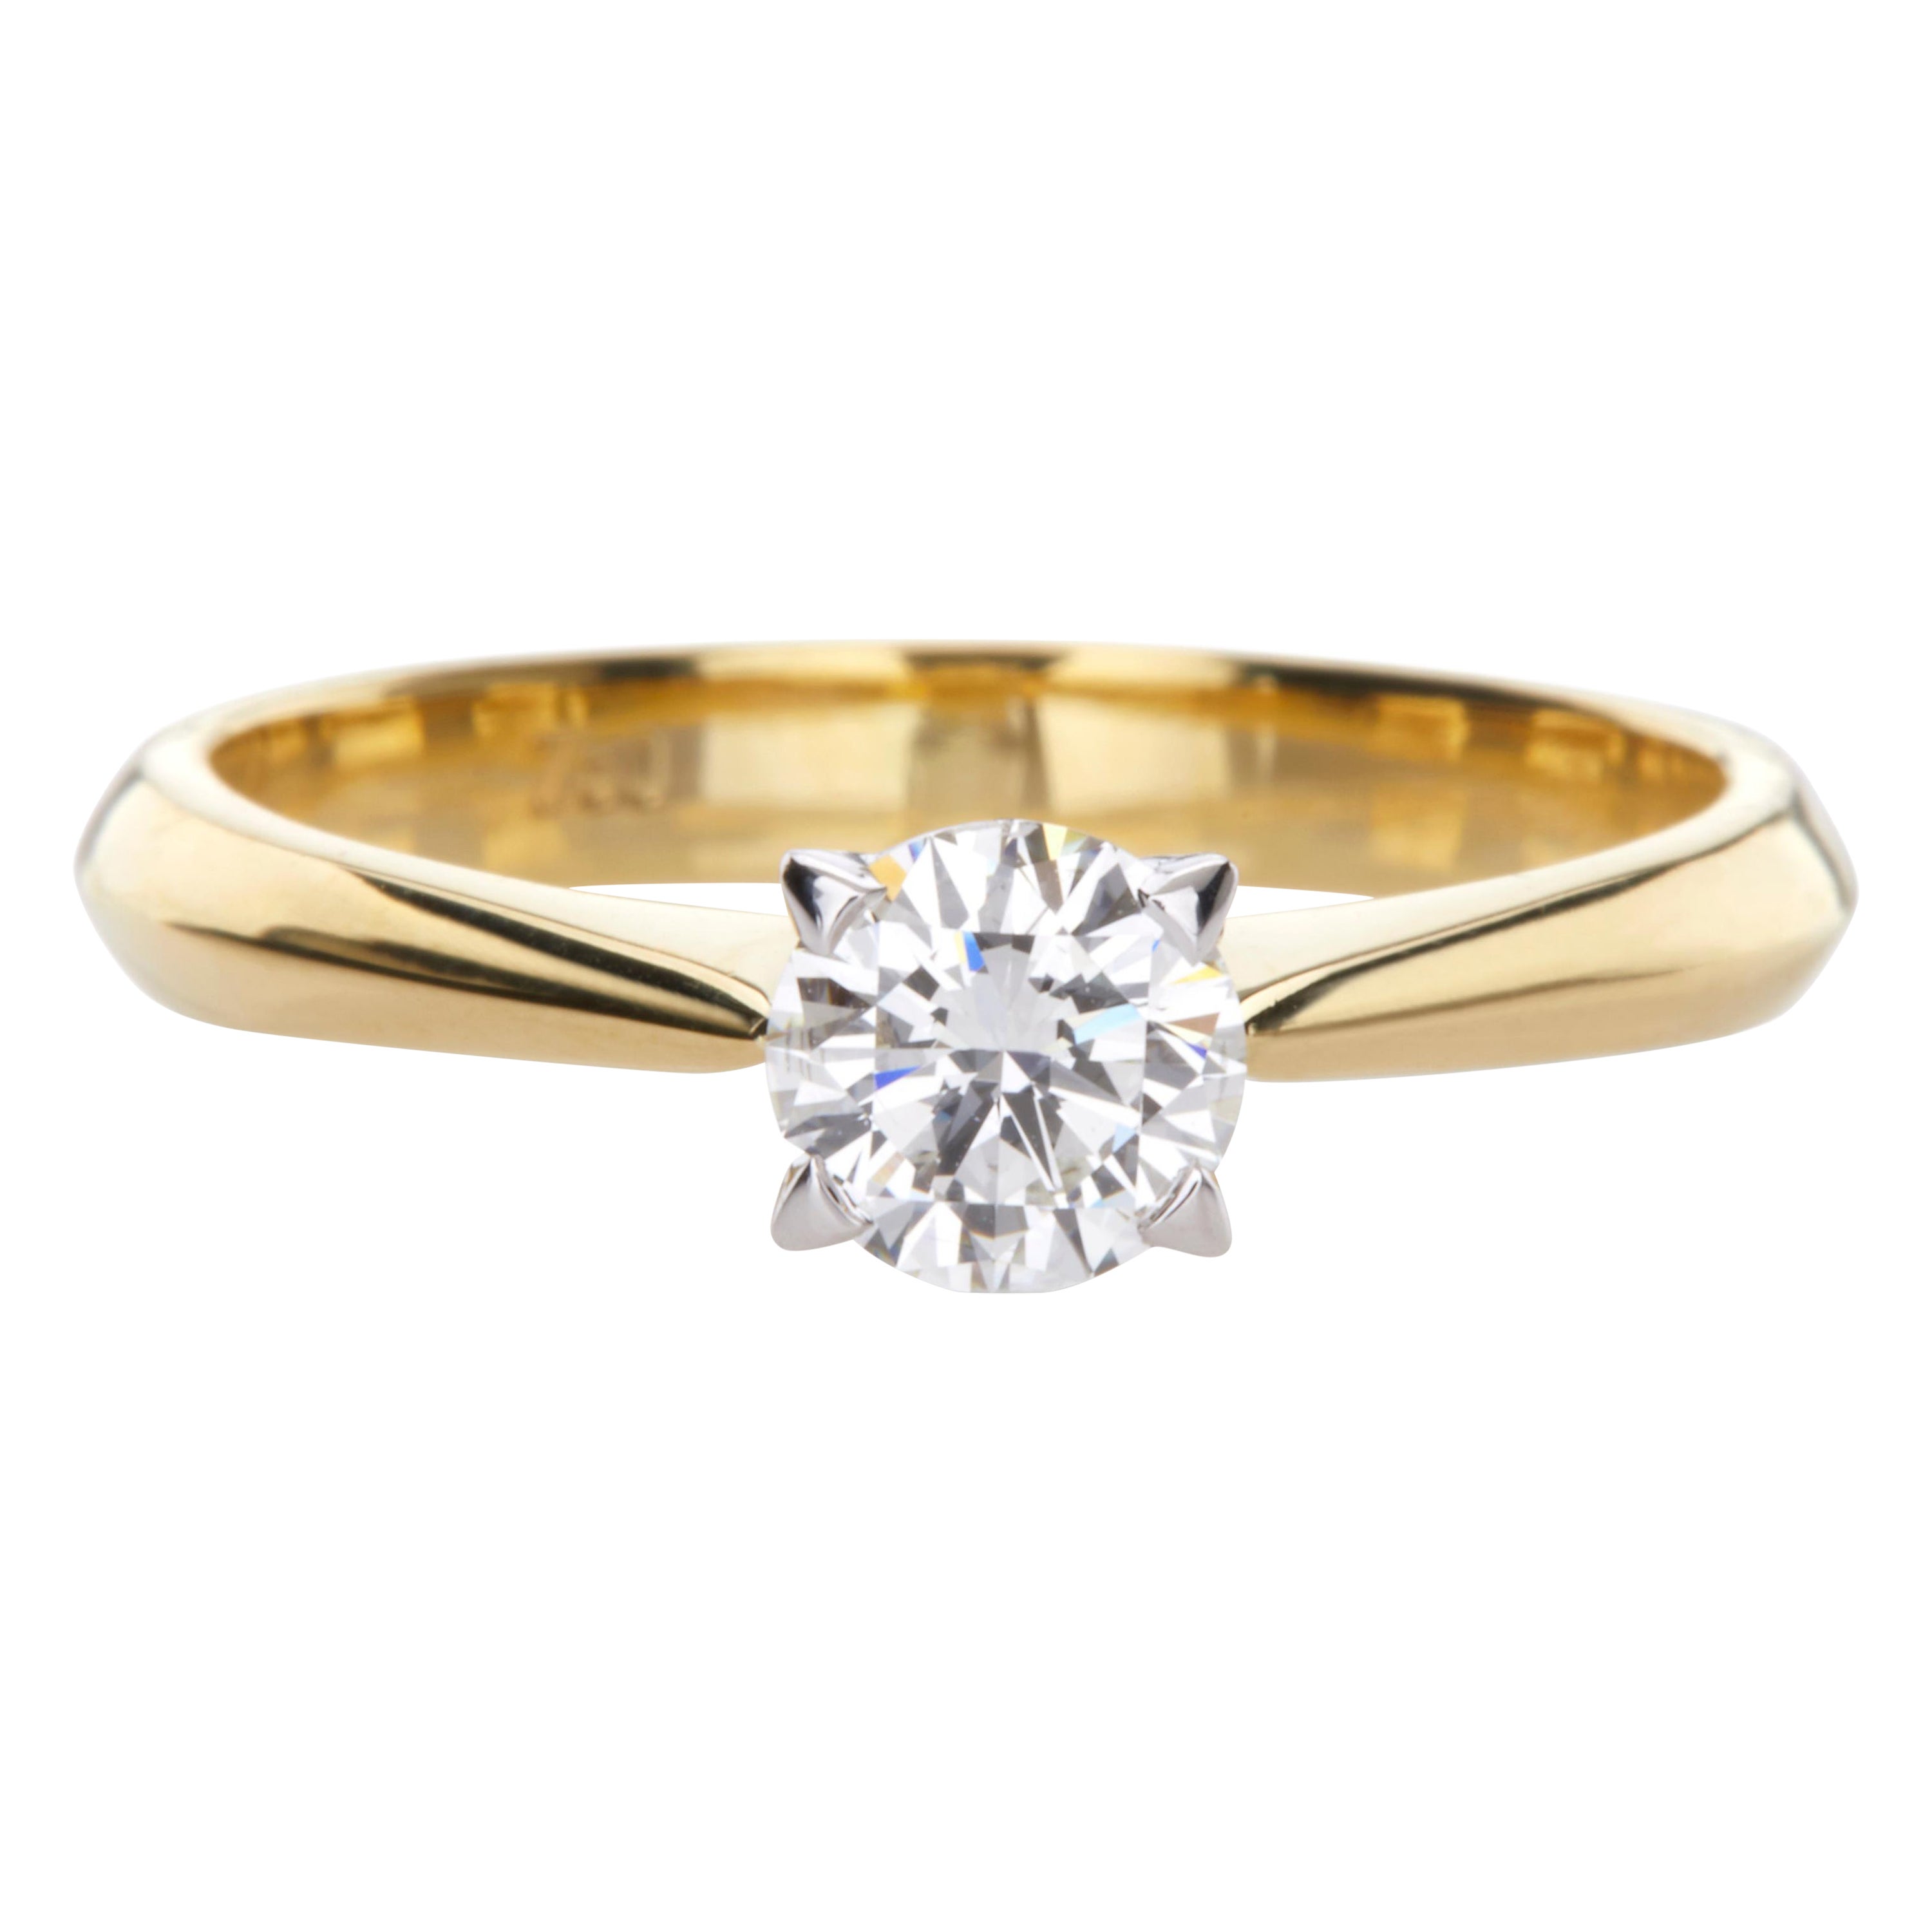 Nicofilimon the Jewelry Designer   Solitaire Rings